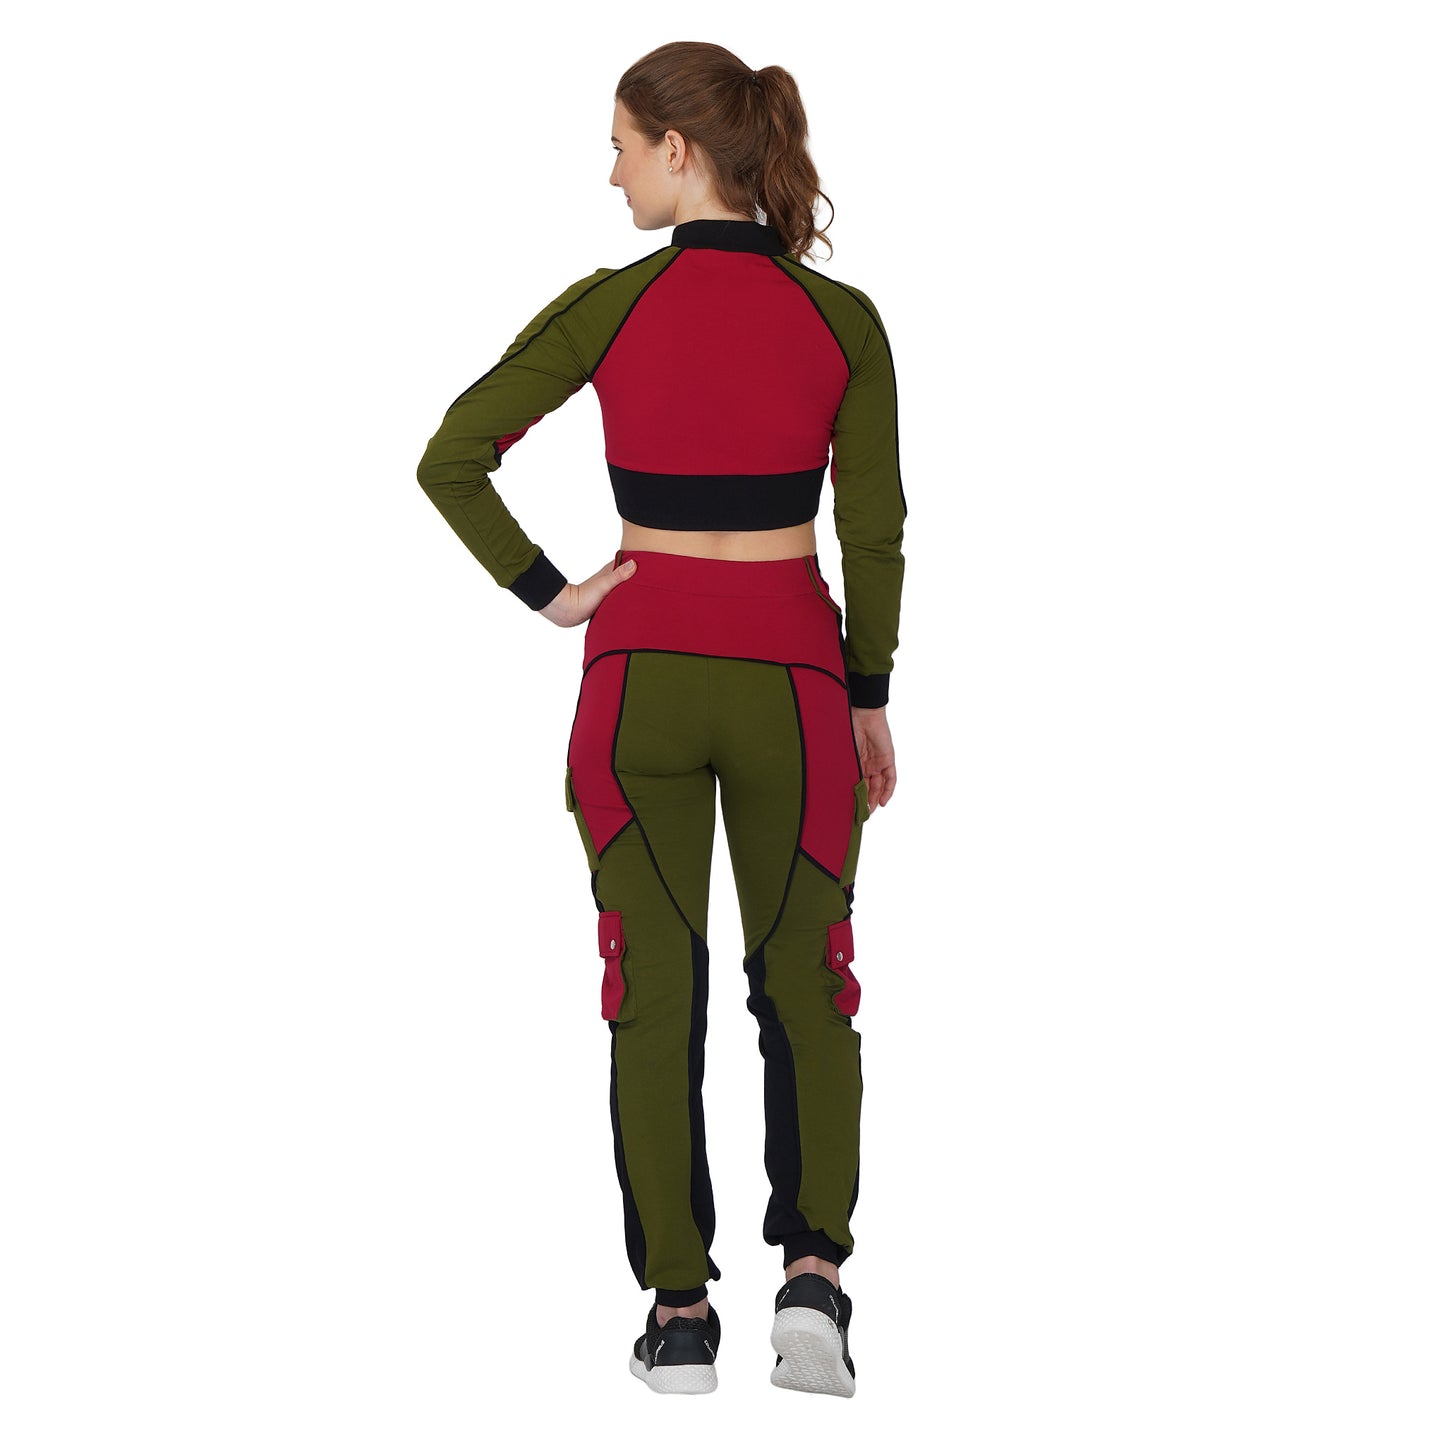 SLAY. Women's Activewear Tracksuit Green Red Black Colorblock Crop Jacket & Cargo Pants Co-ord Set Streetwear